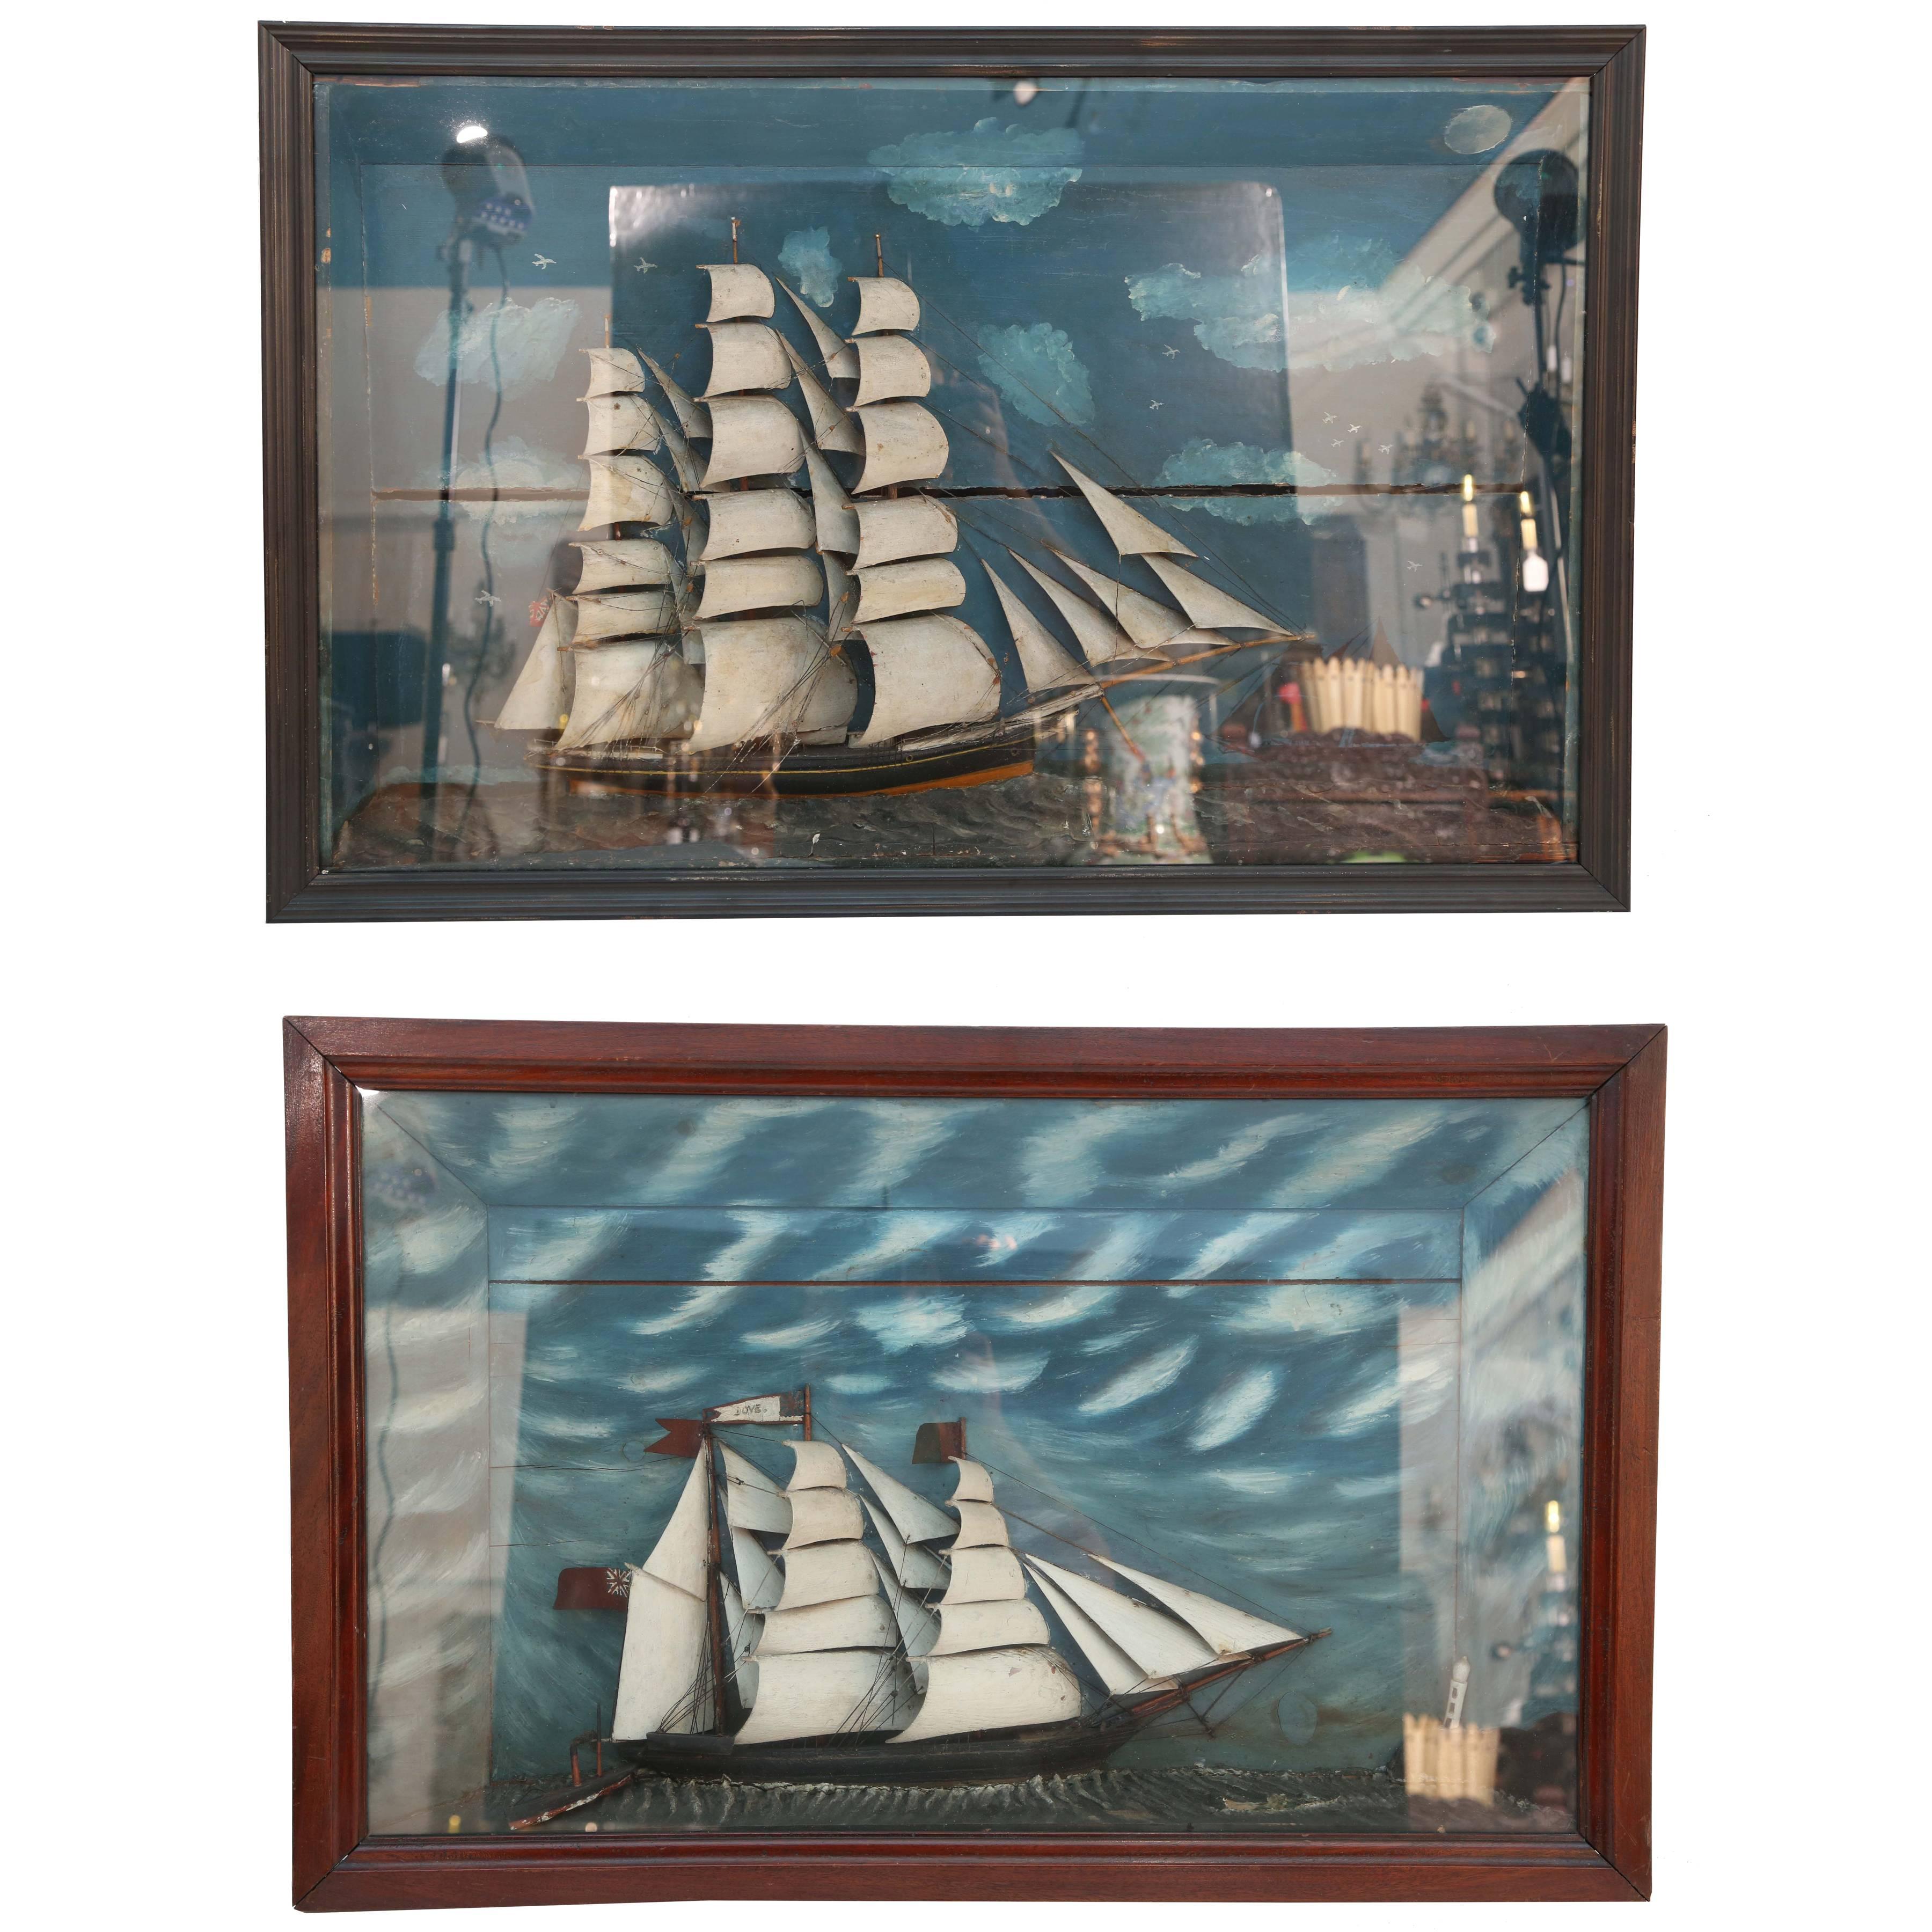 Two Superb 19th Century Naval Sailing Ship Dioramas